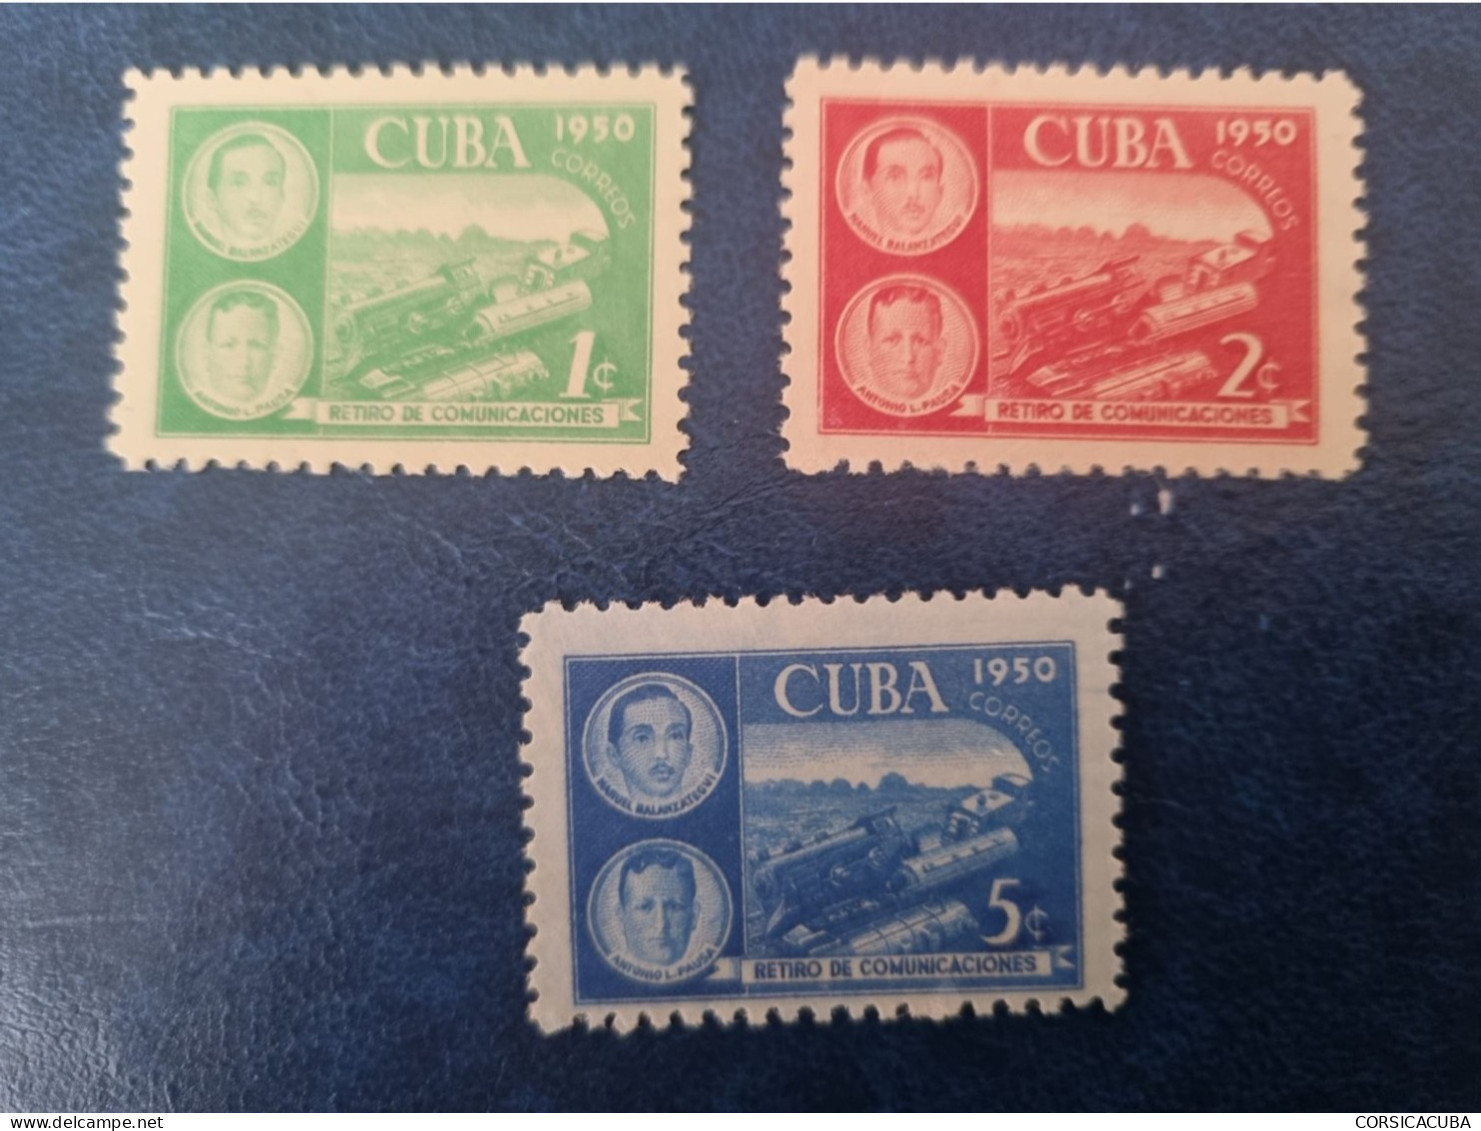 CUBA  NEUF  1950    RETIRO  DE  COMUNICACIONES  //  PARFAIT  ETAT  //  1er  CHOIX  // - Nuevos